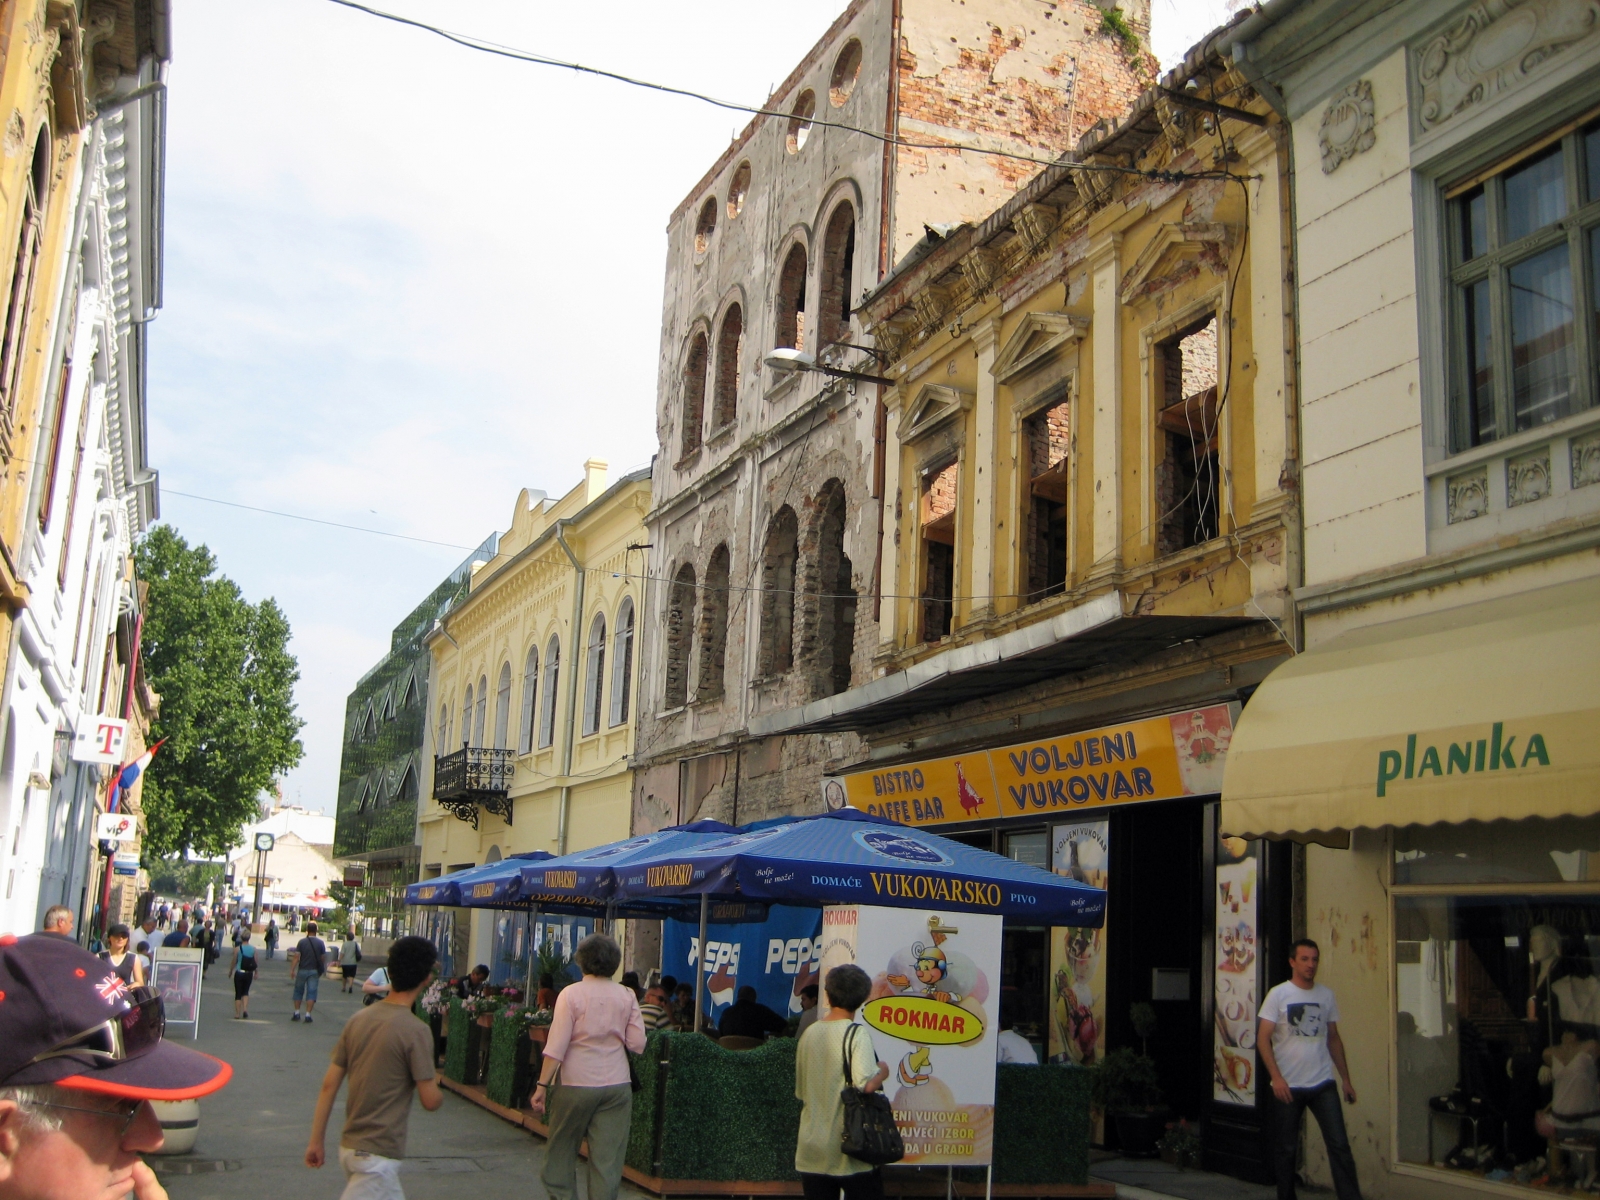 Downtown Vukovar, Croatia